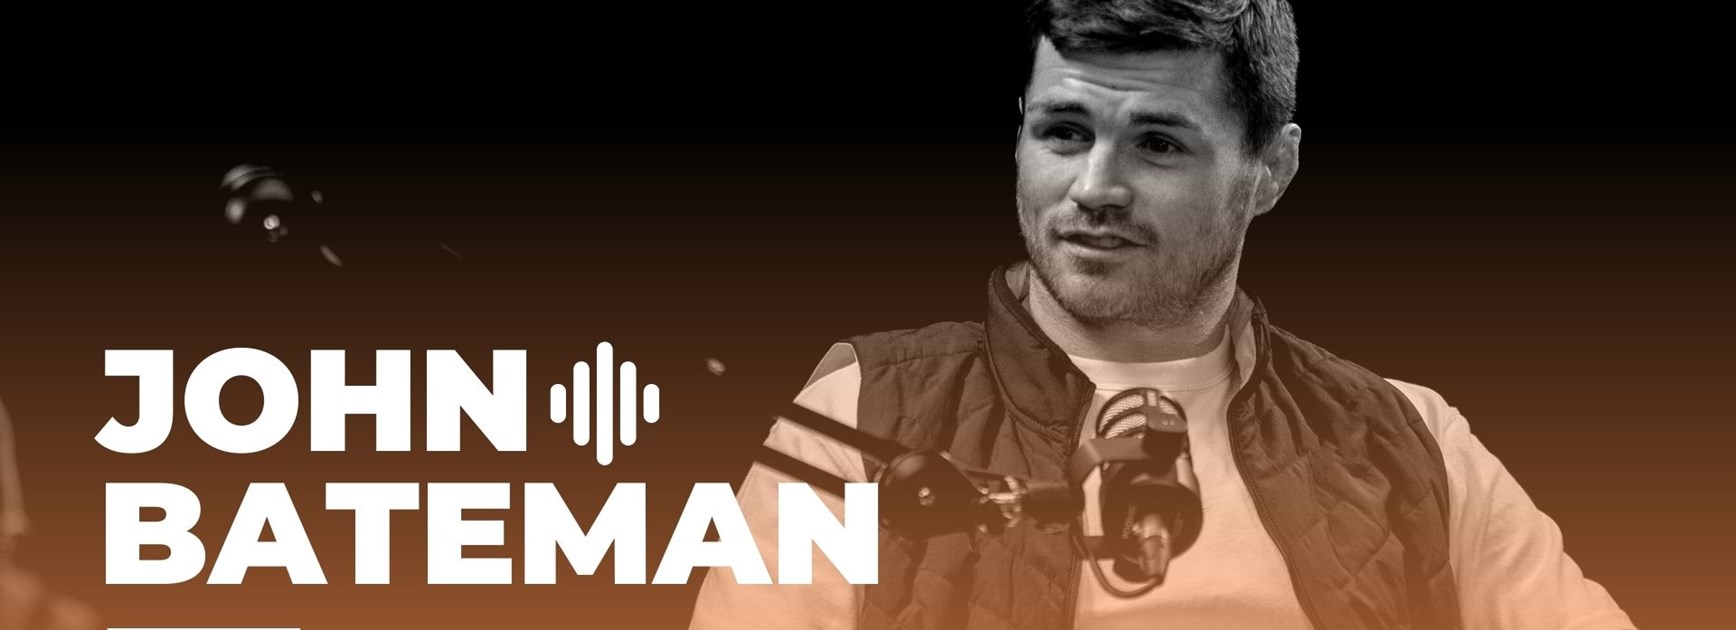 Podcast: BTR Episode 15 with John Bateman